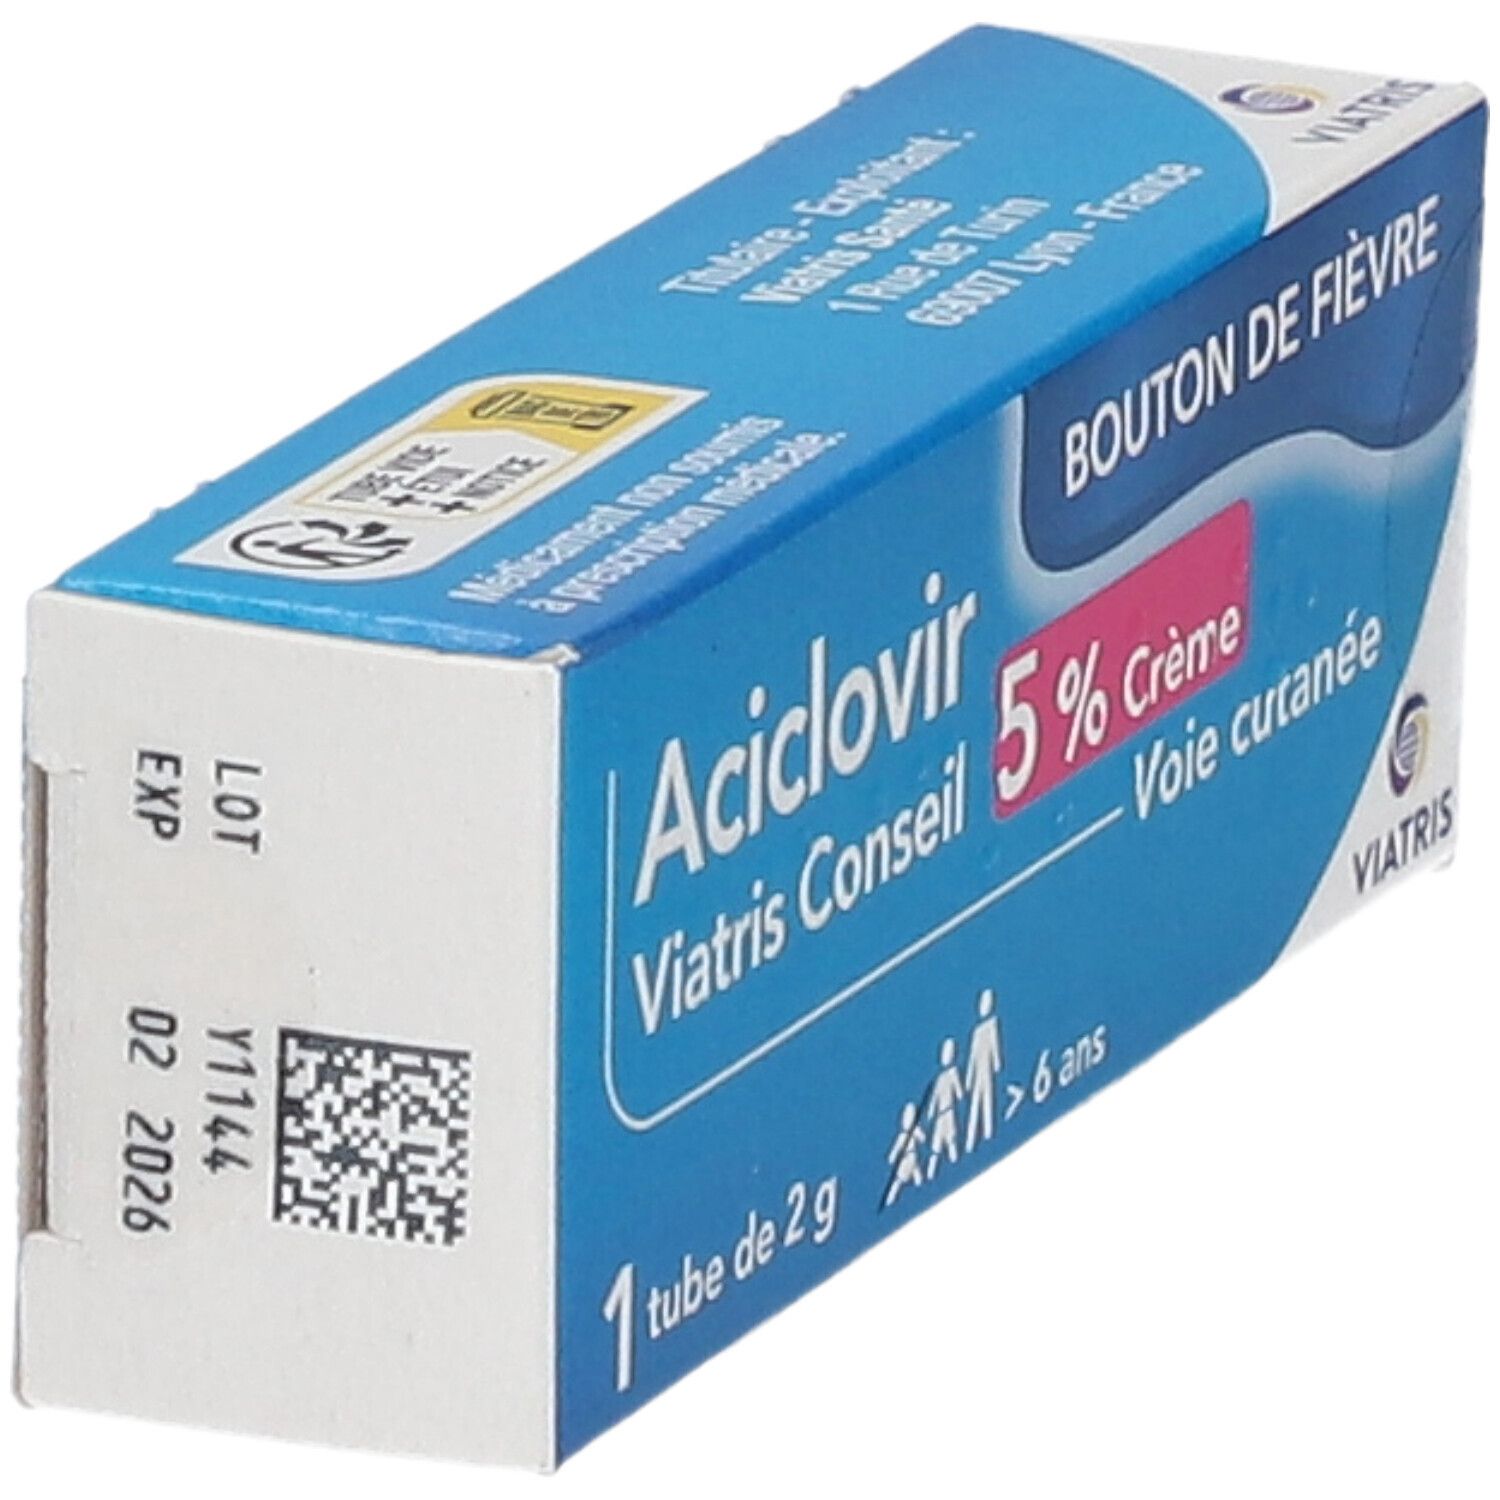 Aciclovir MYLAN Pharma tube crème 5 %